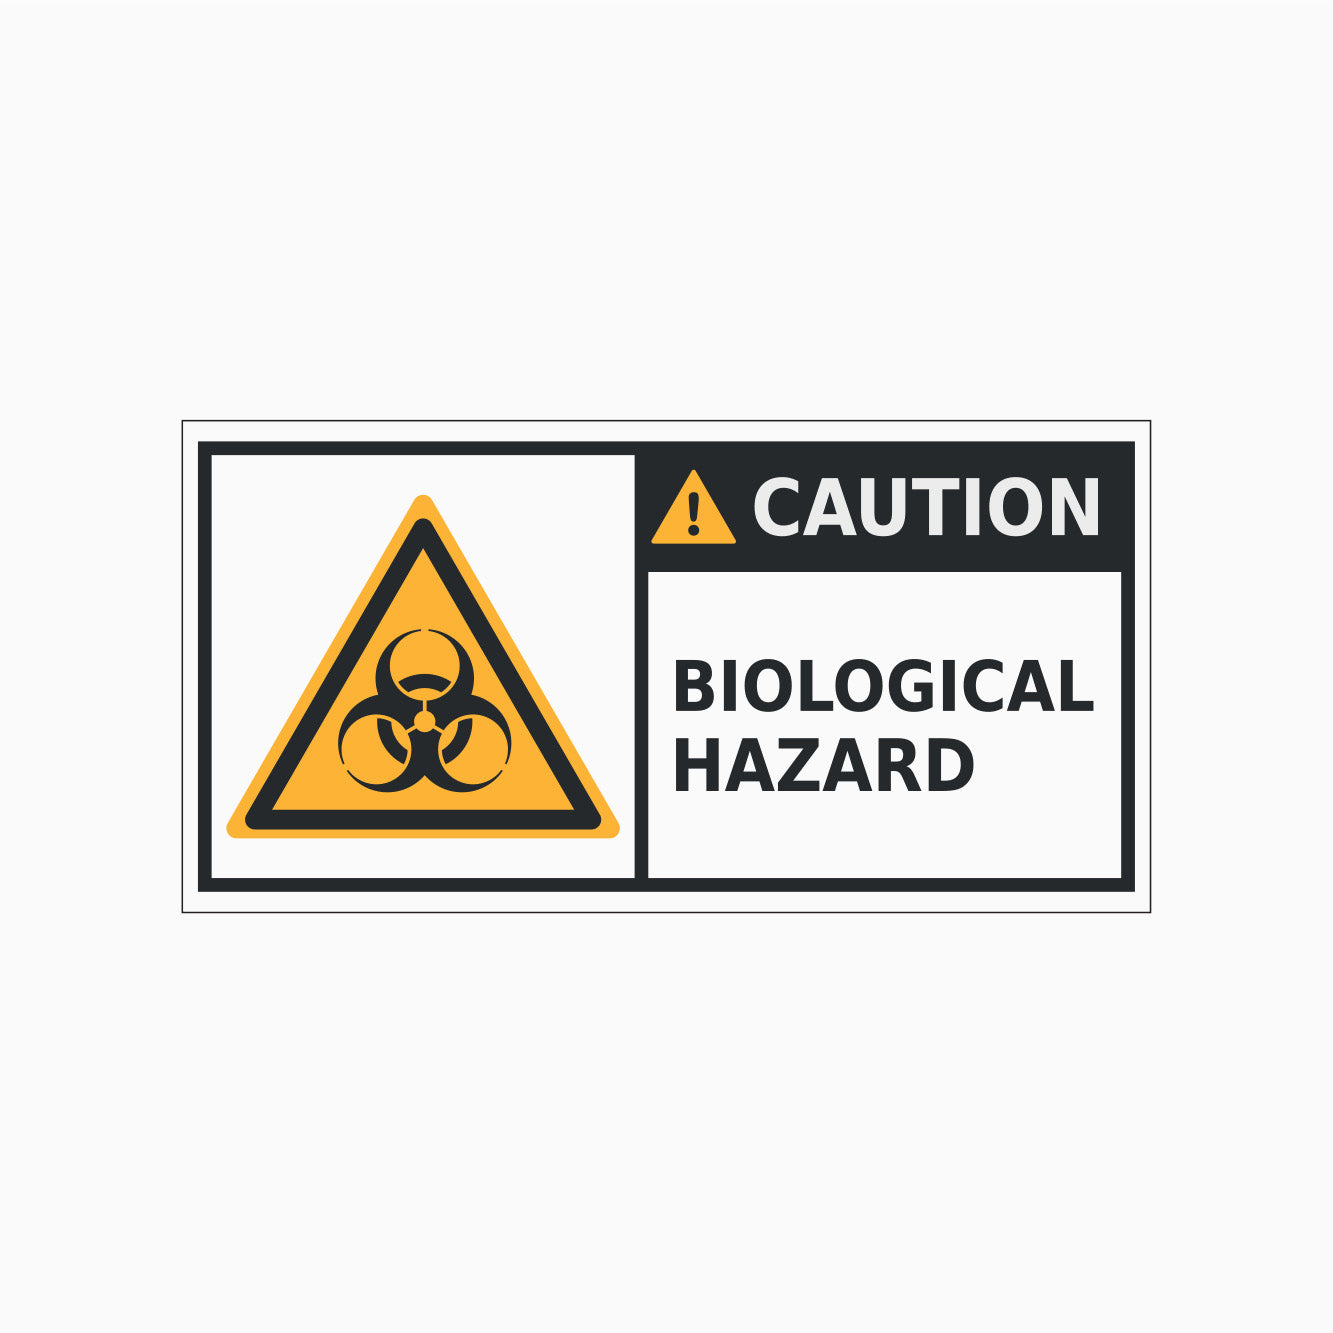 caution sign - BIOLOGICAL HAZARD SIGN